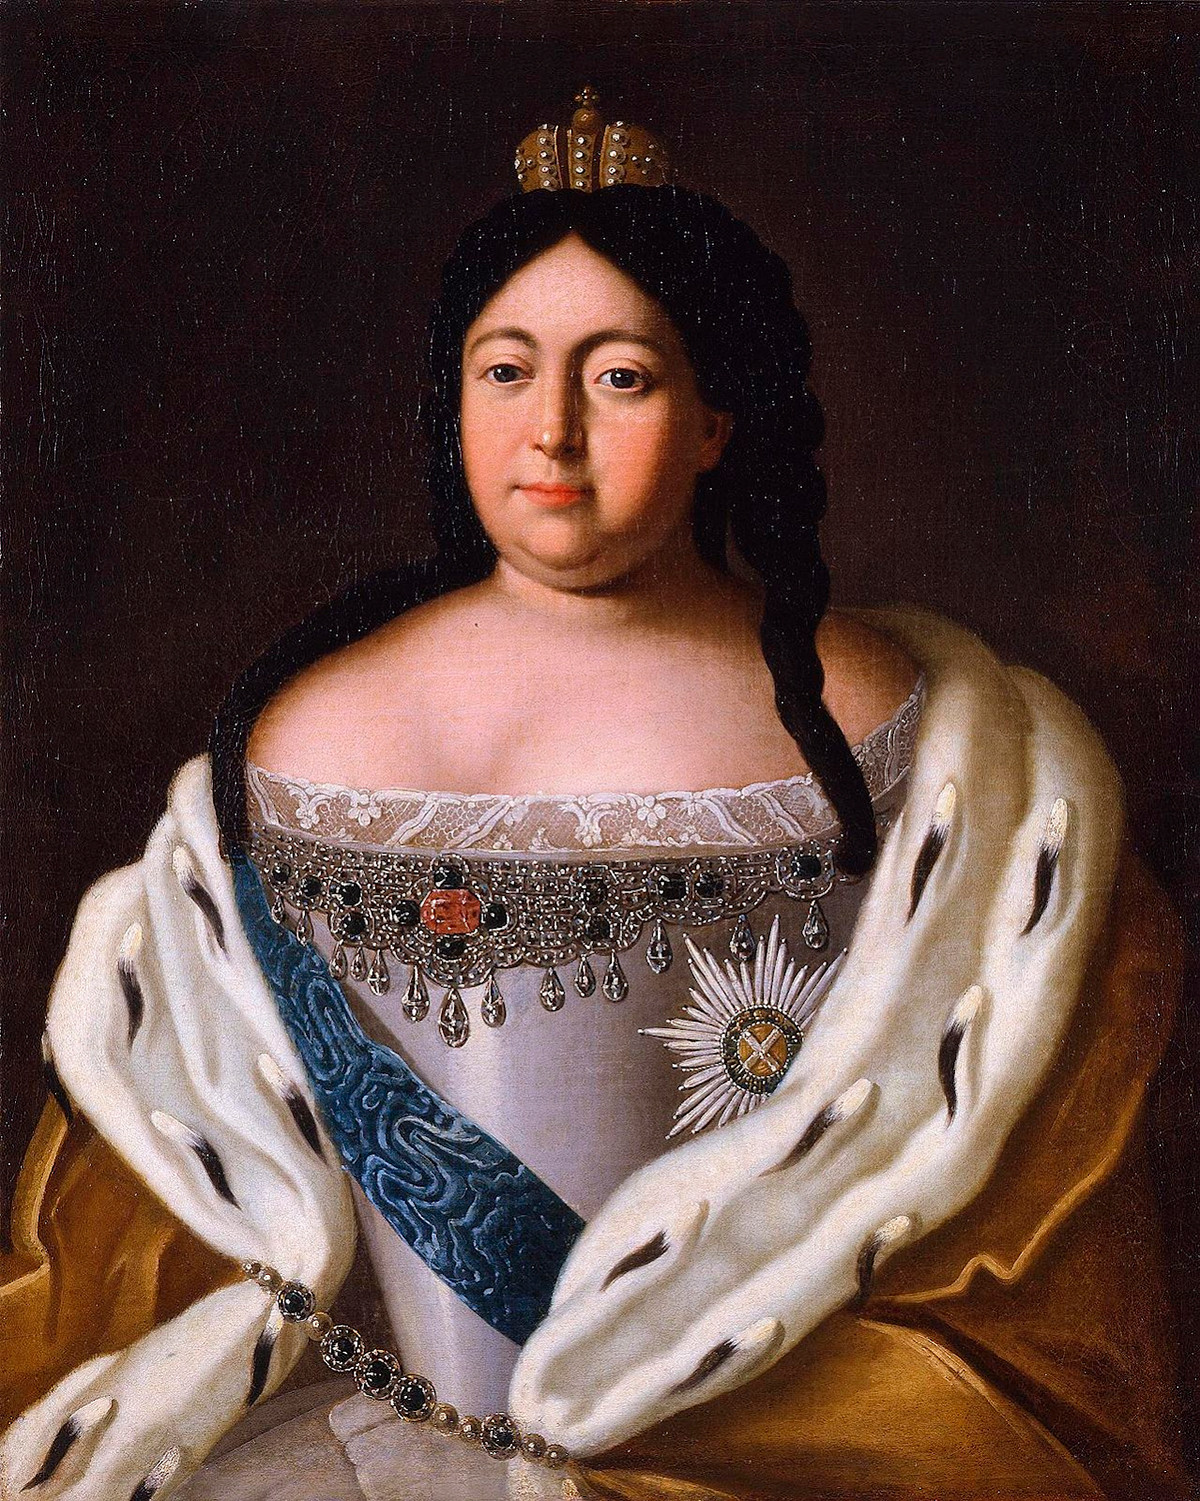 Retrato de Anna Ivanovna feito por pintor desconhecido (1670-1917).